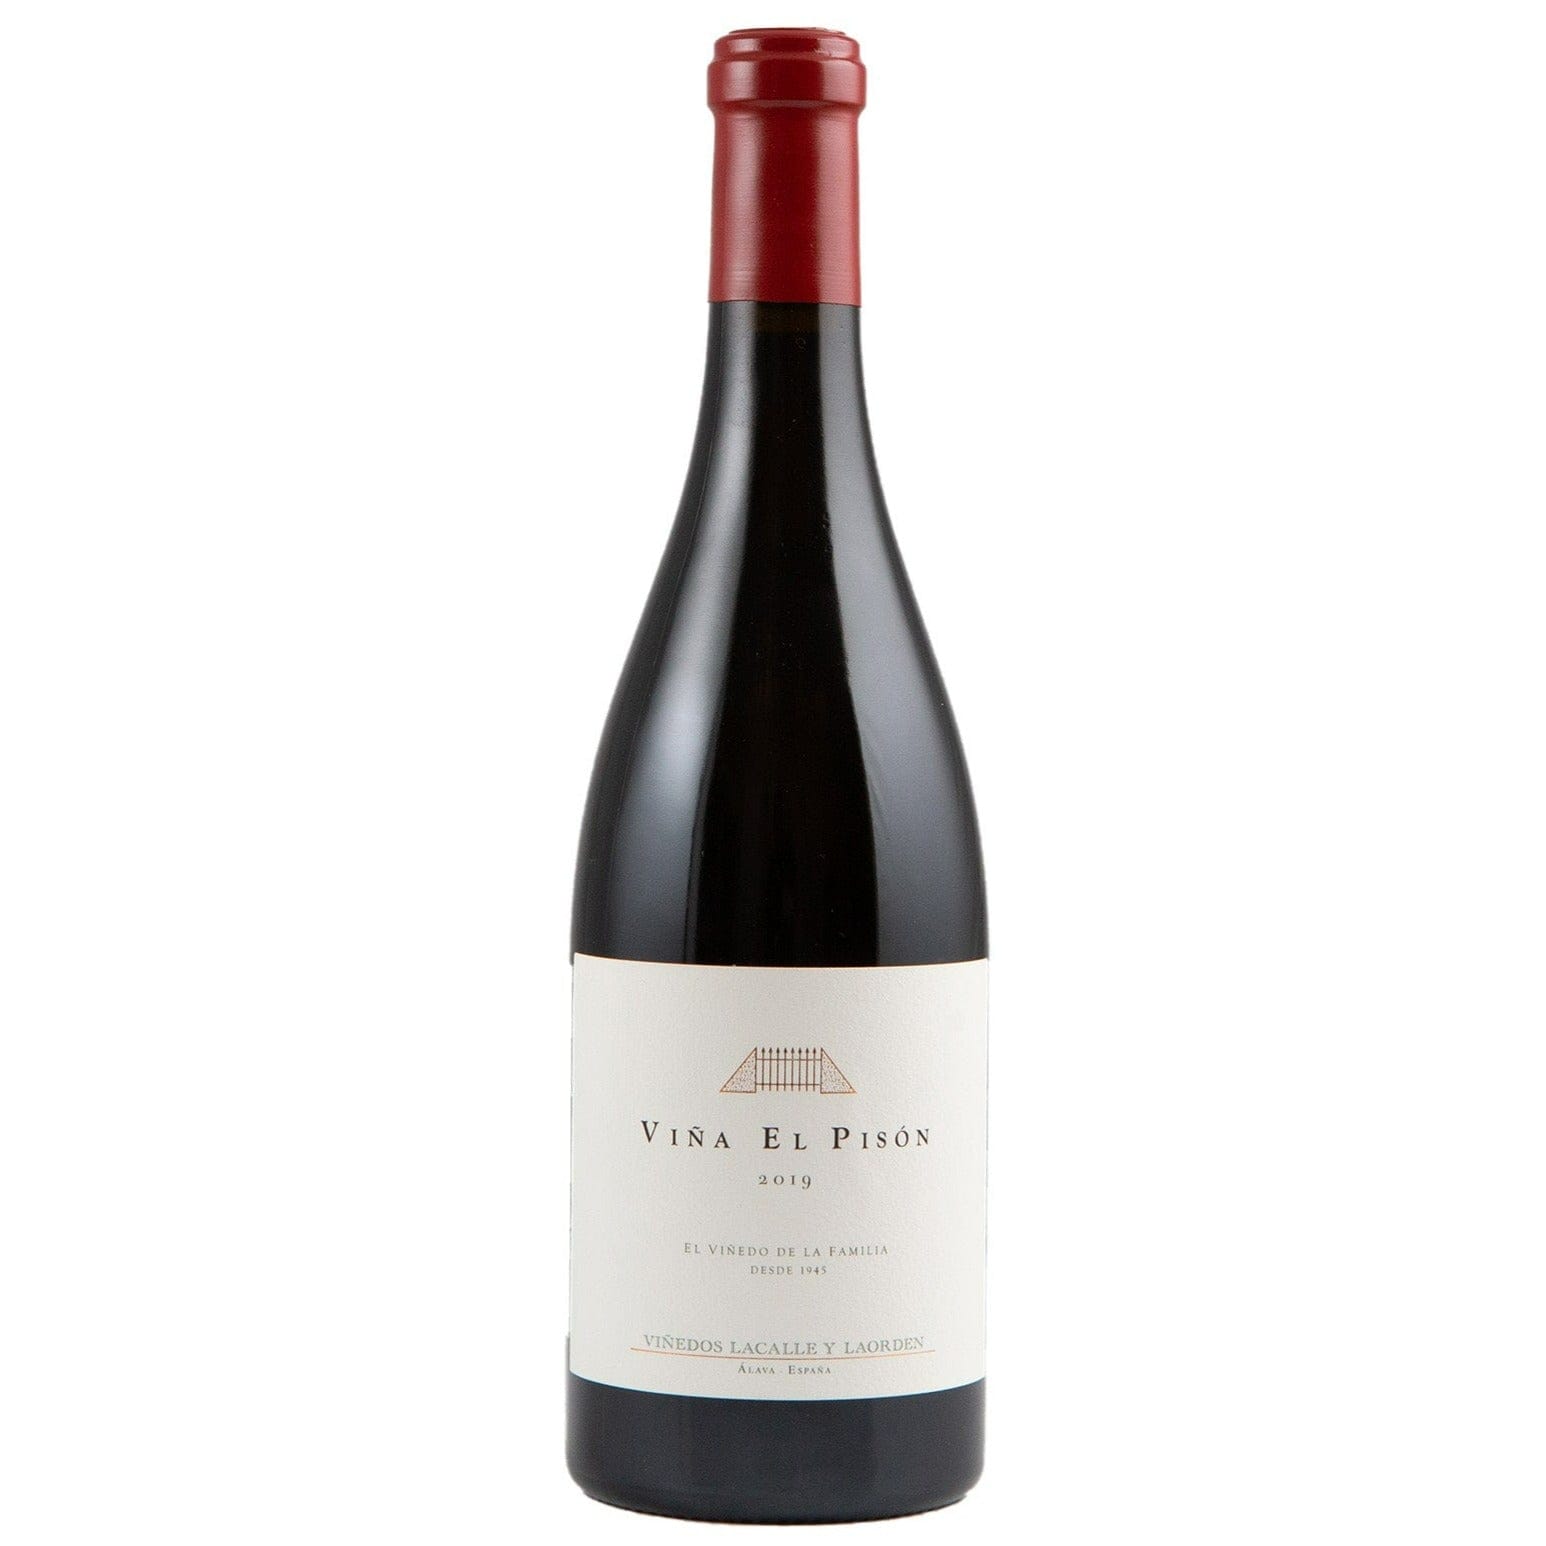 Single bottle of Red wine Artadi, Vina El Pison, Rioja Alavesa, 2019 100% Tempranillo